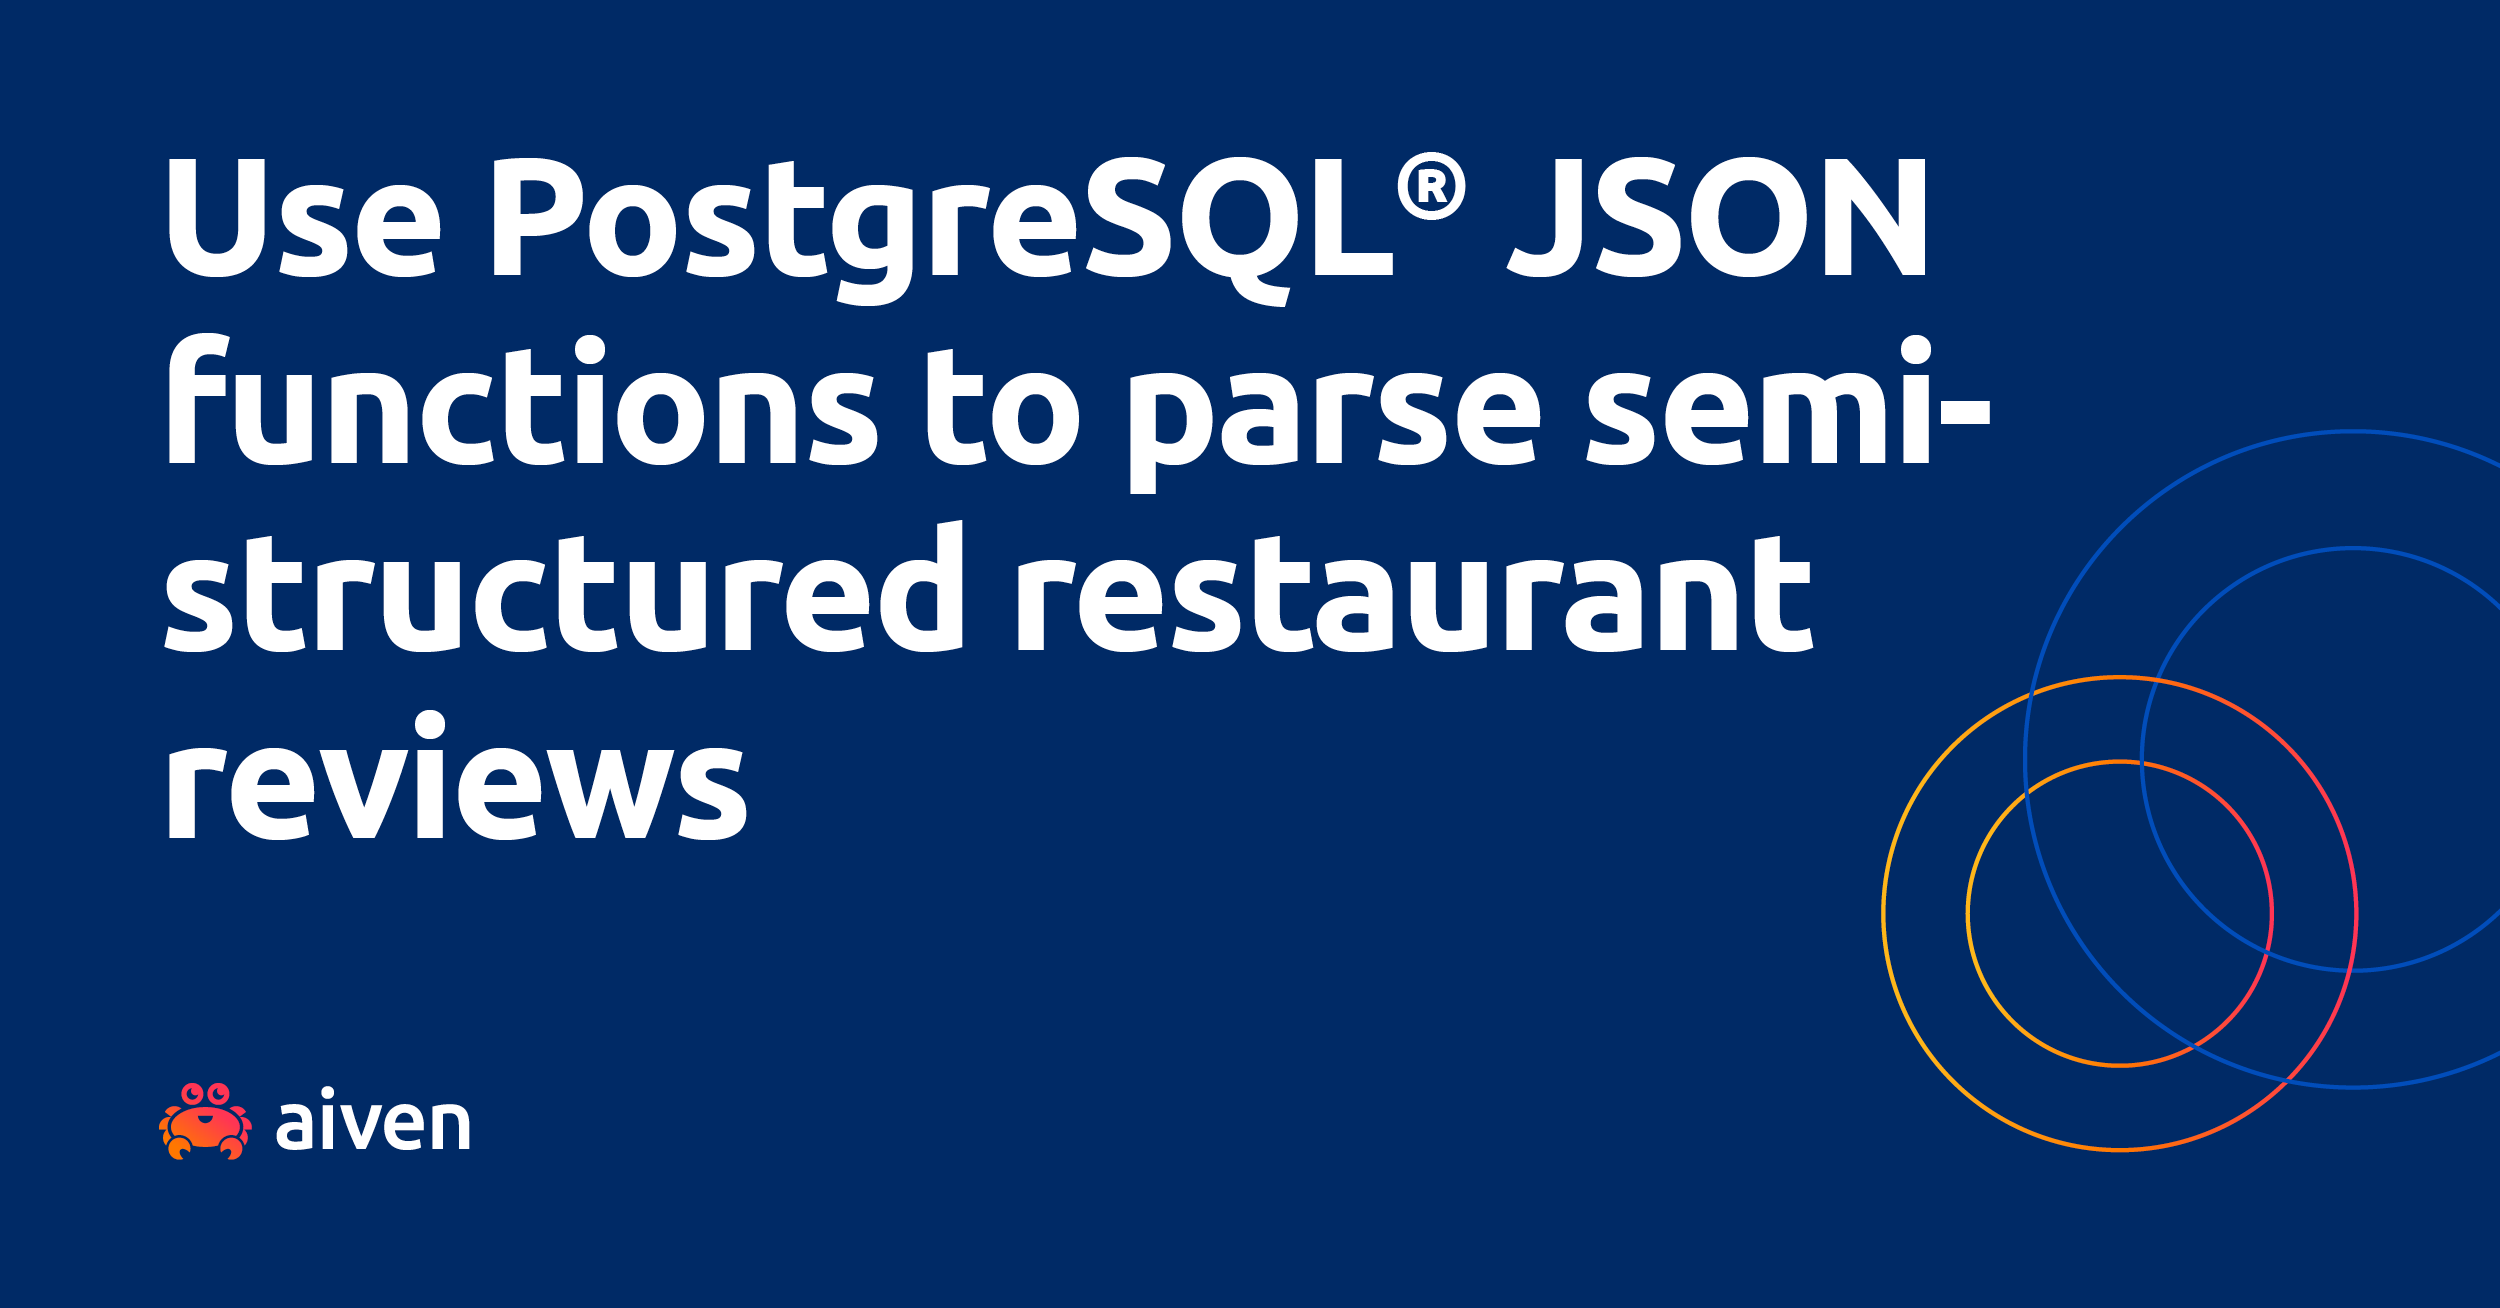 Using PostgreSQL® JSON functions to navigate reviews of restaurants in India illustration